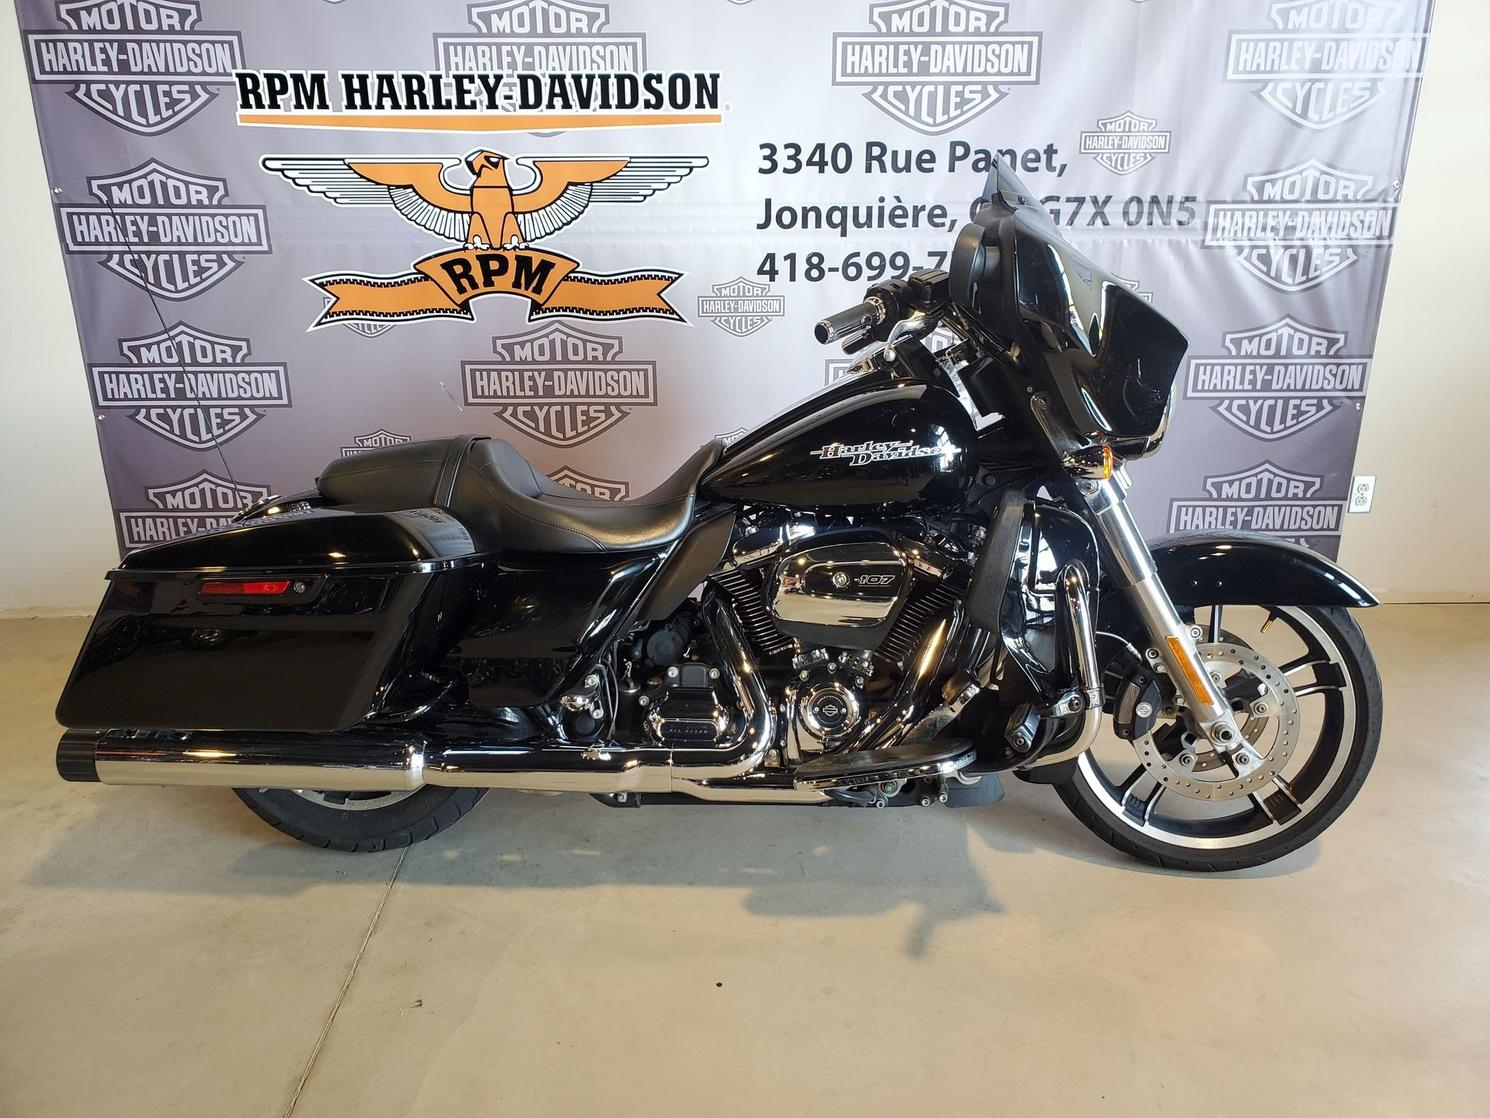 KB607744 Harley-Davidson Street Glide 2019